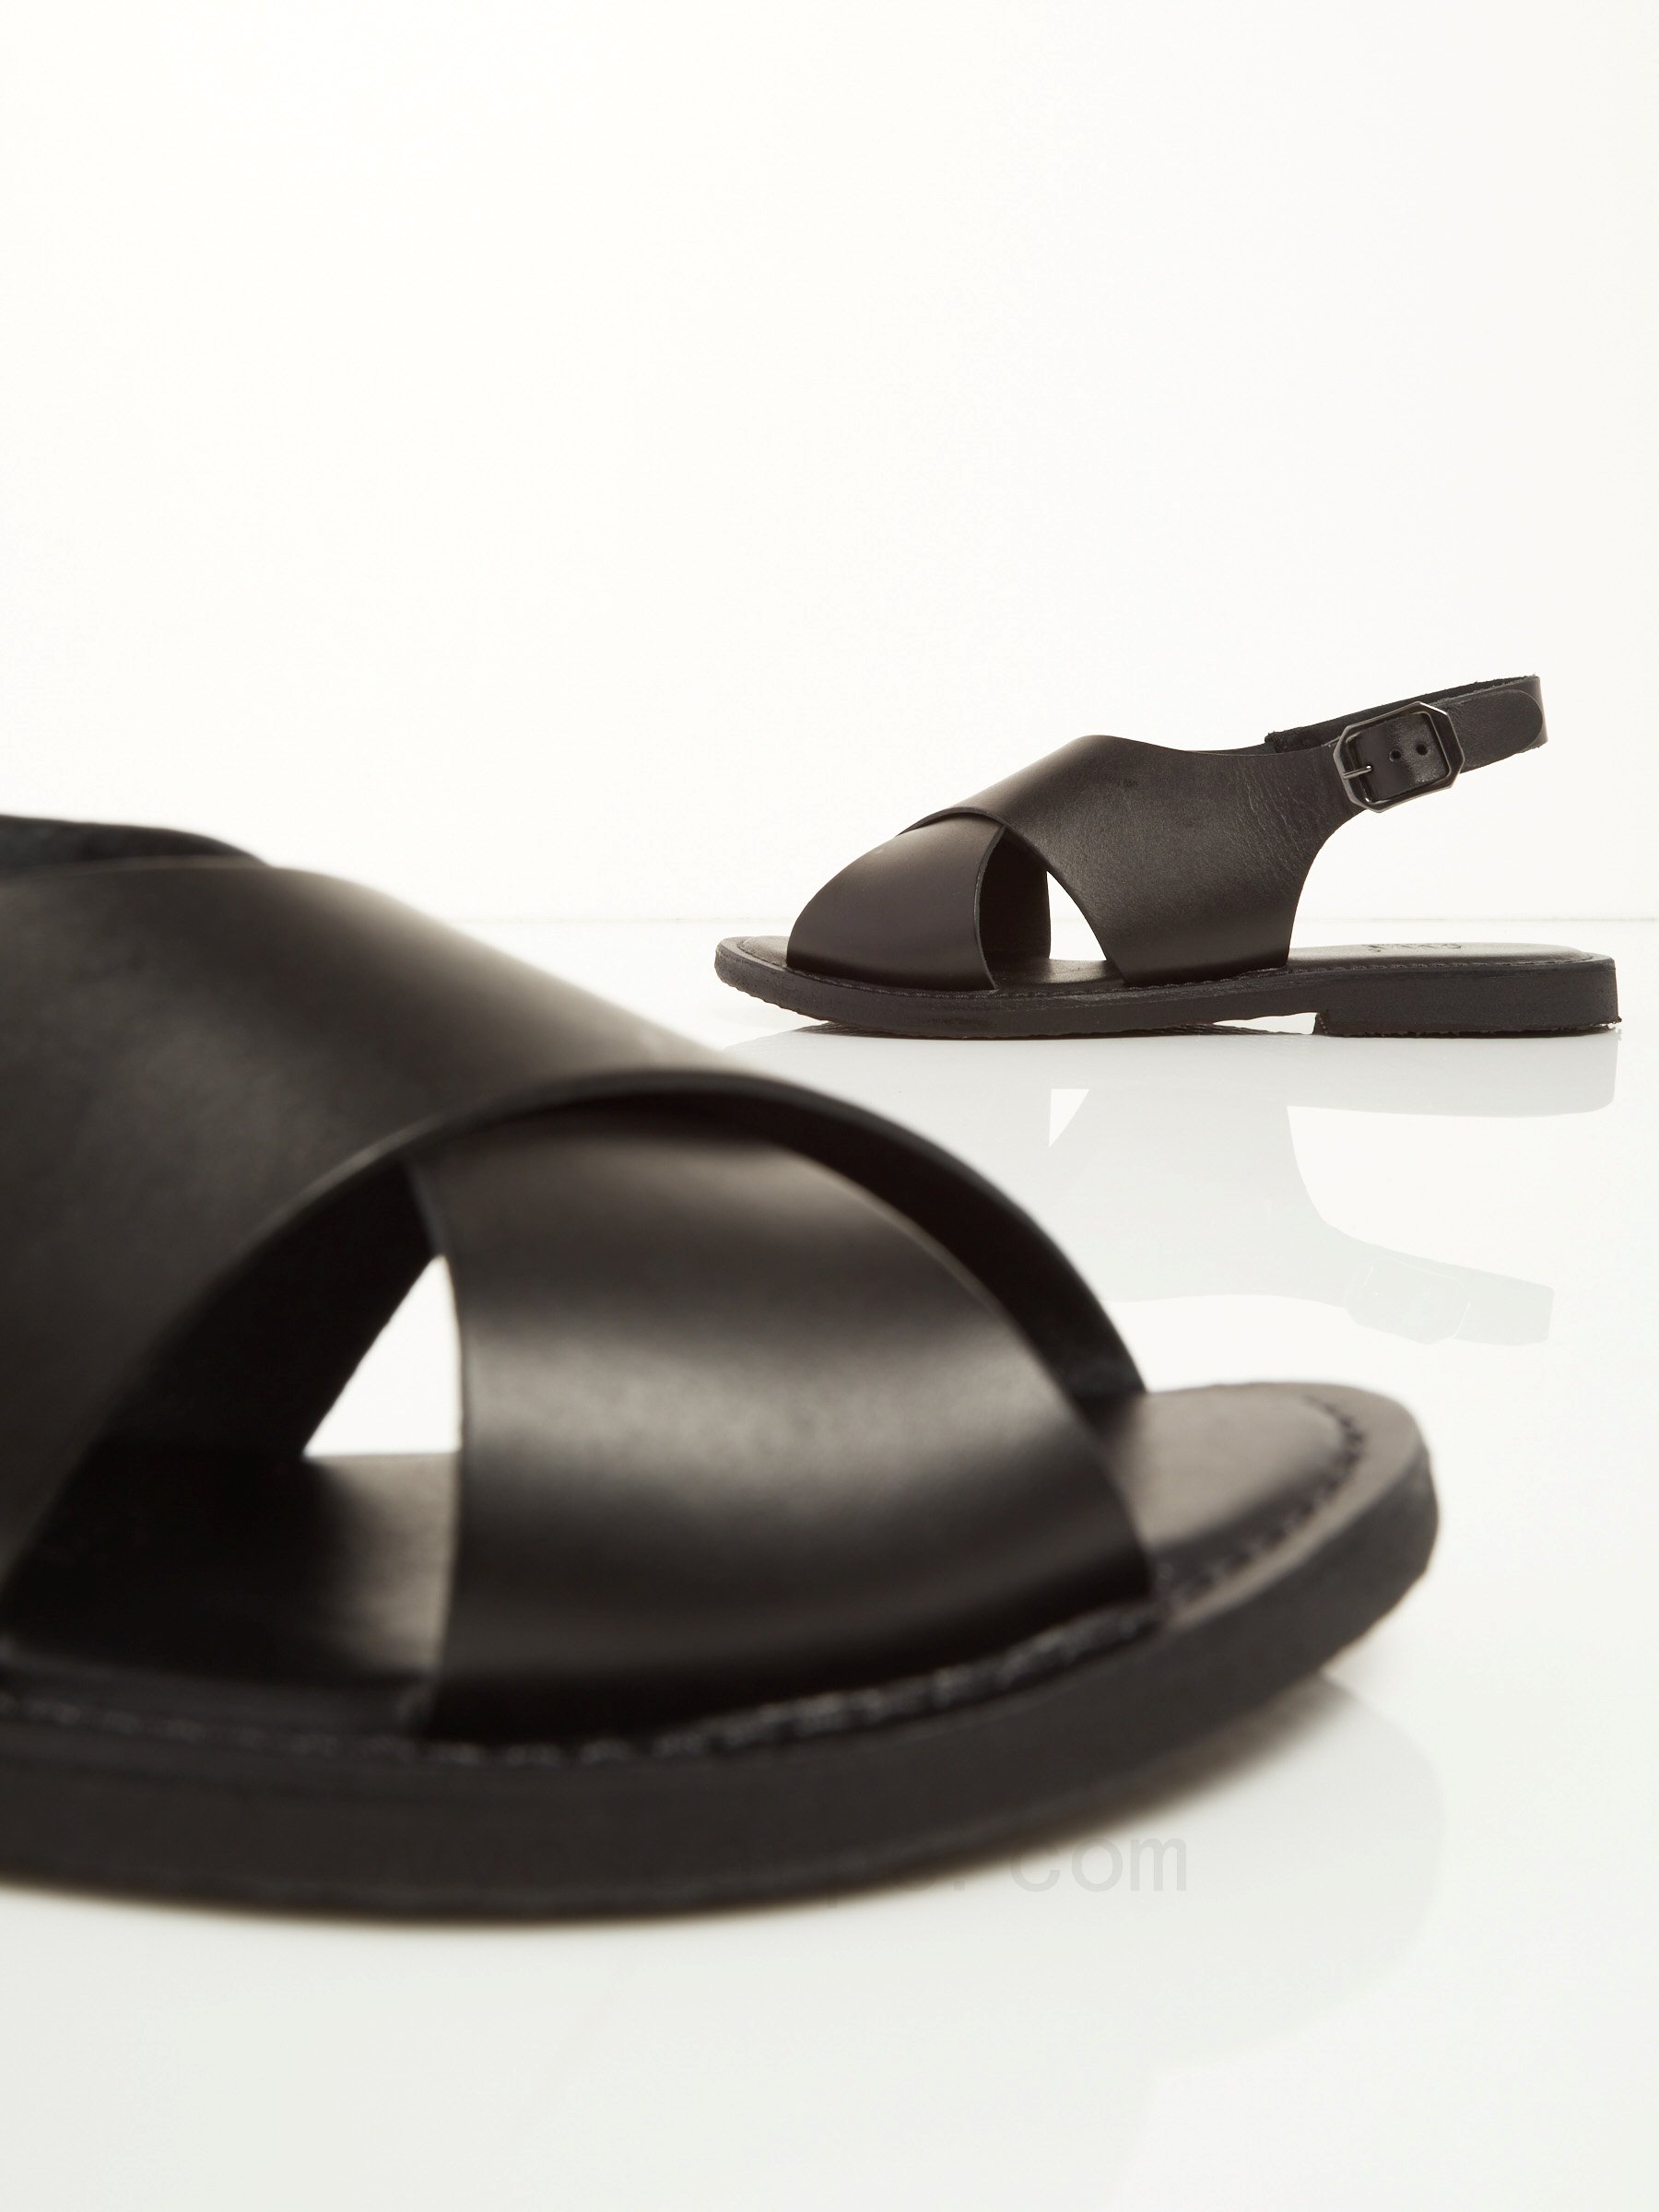 Shop On Line Leather Sandals F08161027-0504 scarpe ovye